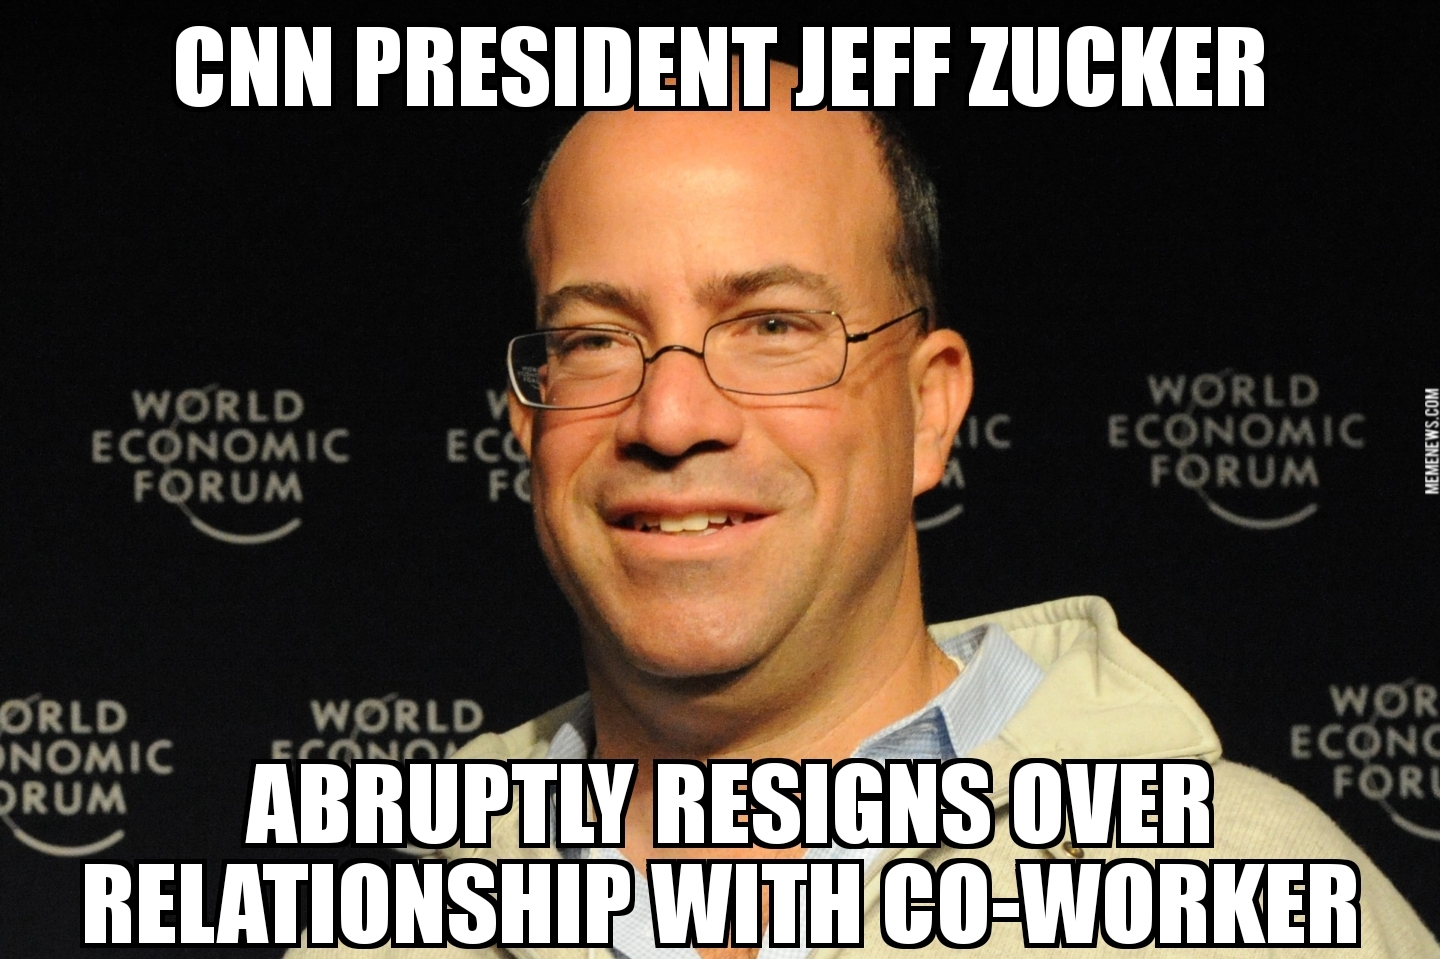 Jeff Zucker resigns